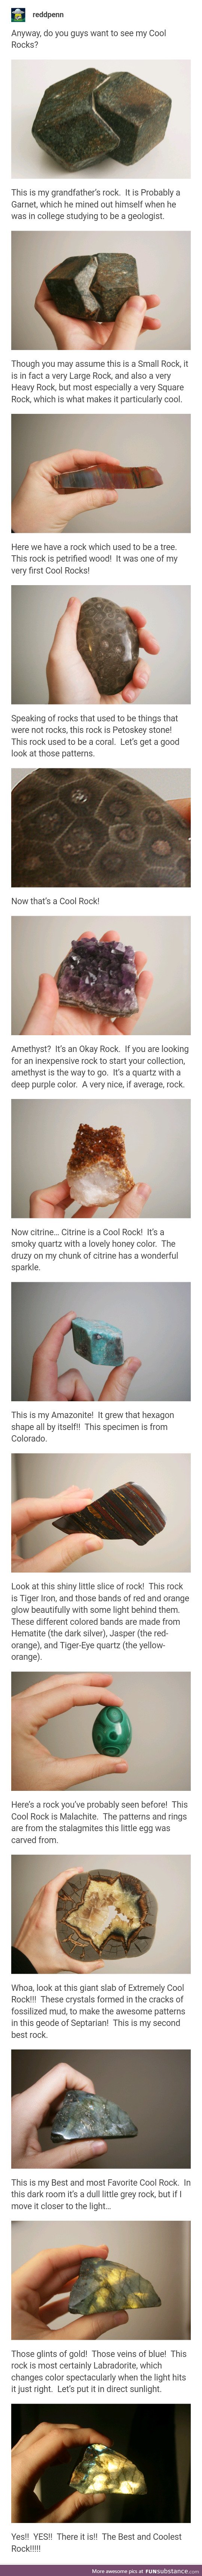 Geology jokes rock